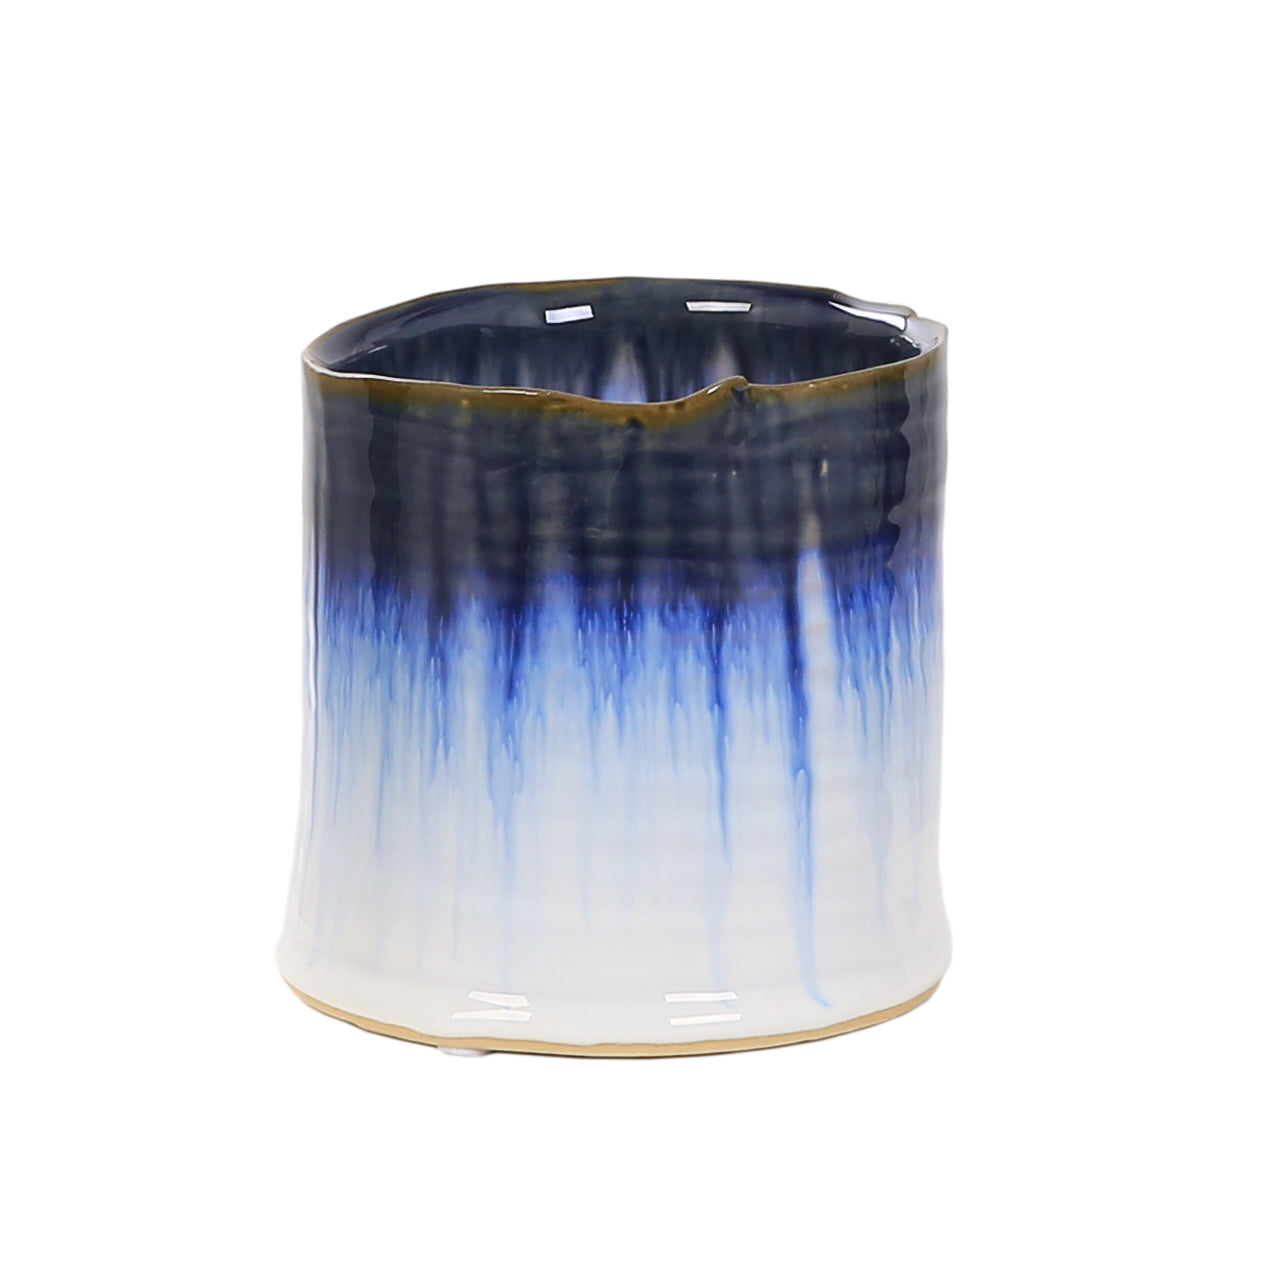 Storm Ceramic Plant Pot, Blue